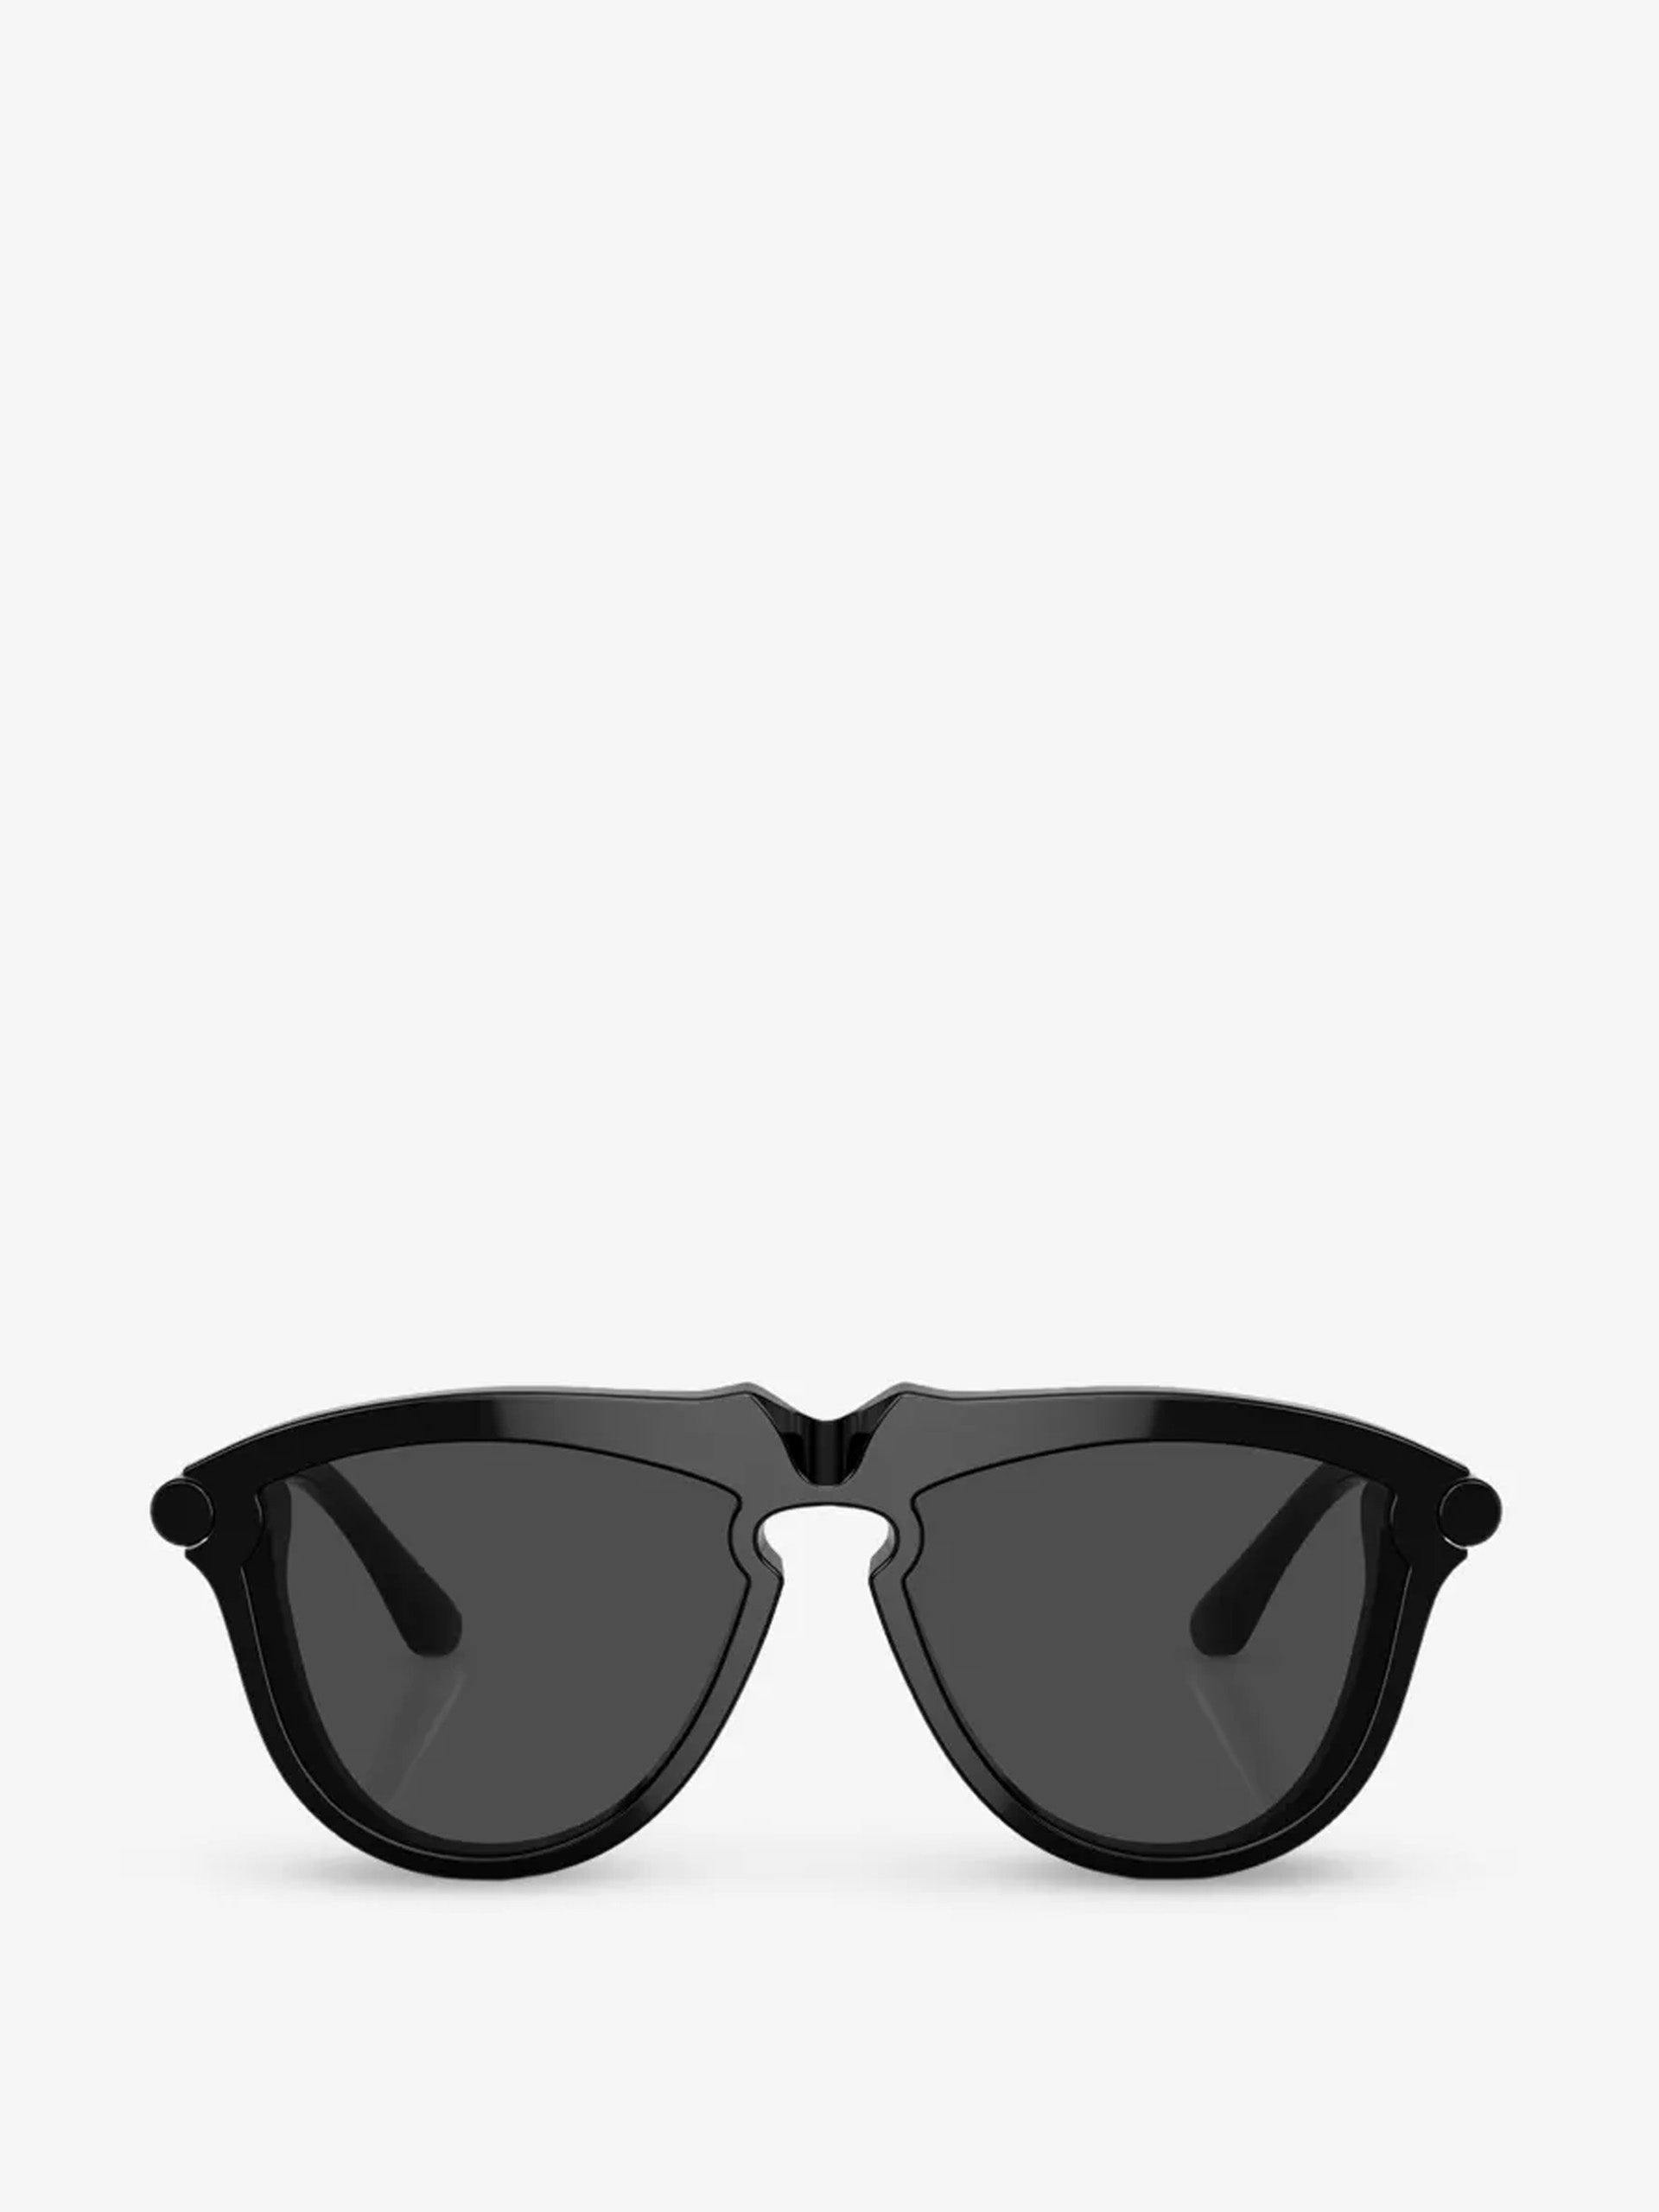 Pilot-frame acetate sunglasses